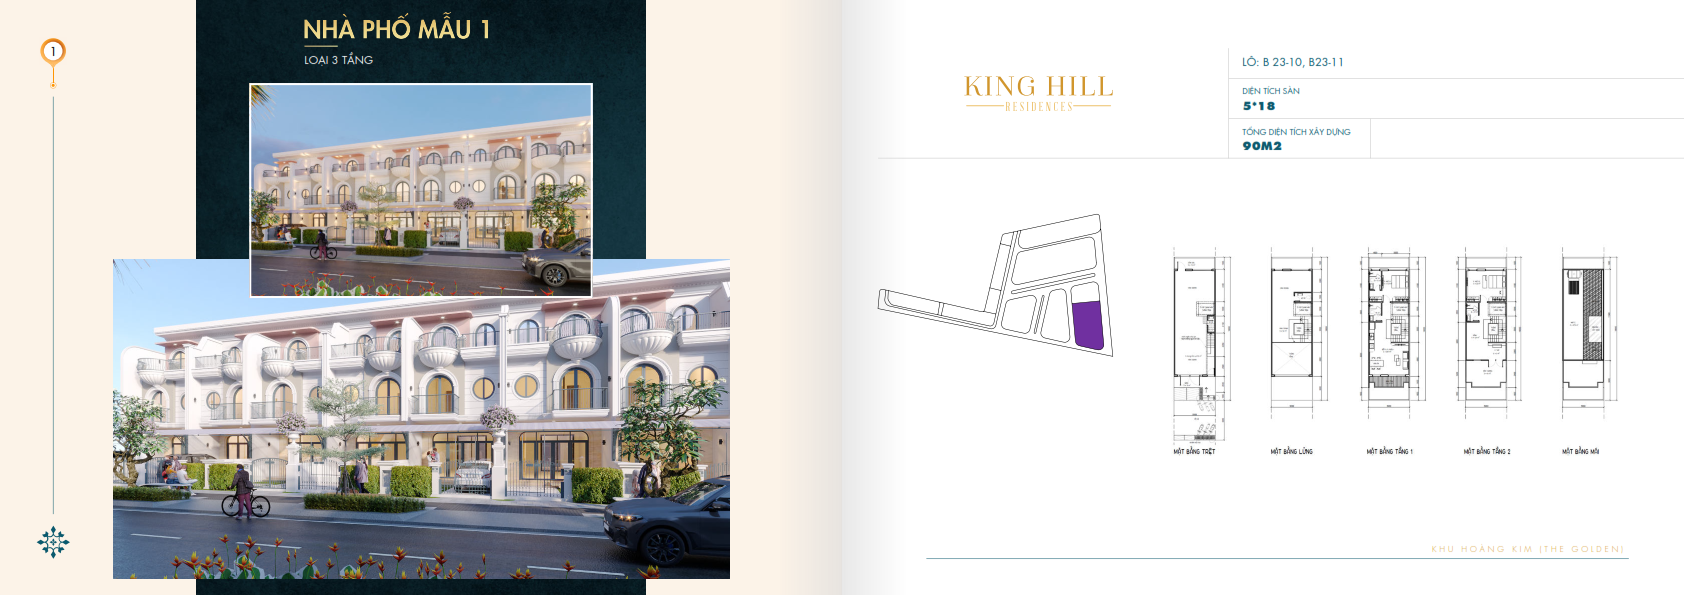 Nha pho mau 1 Du an King Hill Residences - King Hill Residences